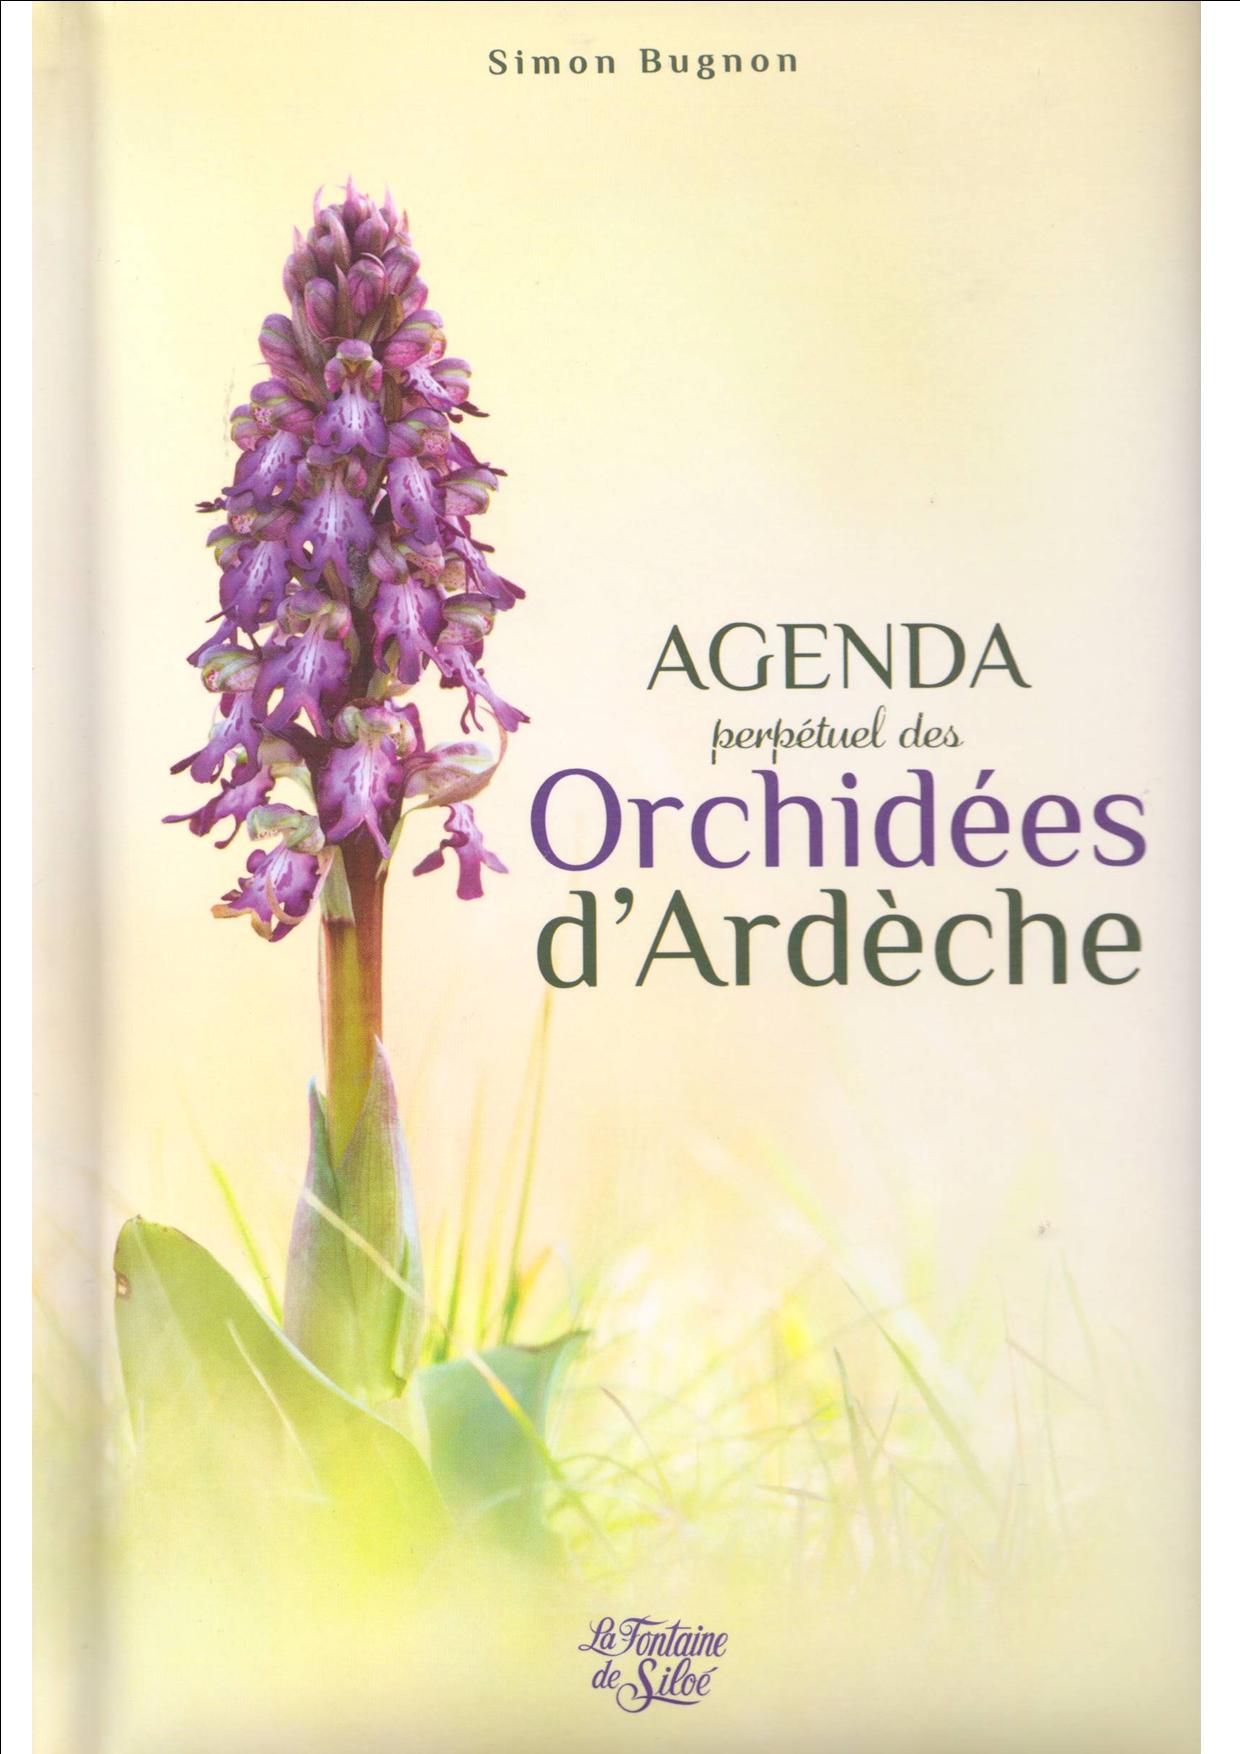 Bugnon orchidees